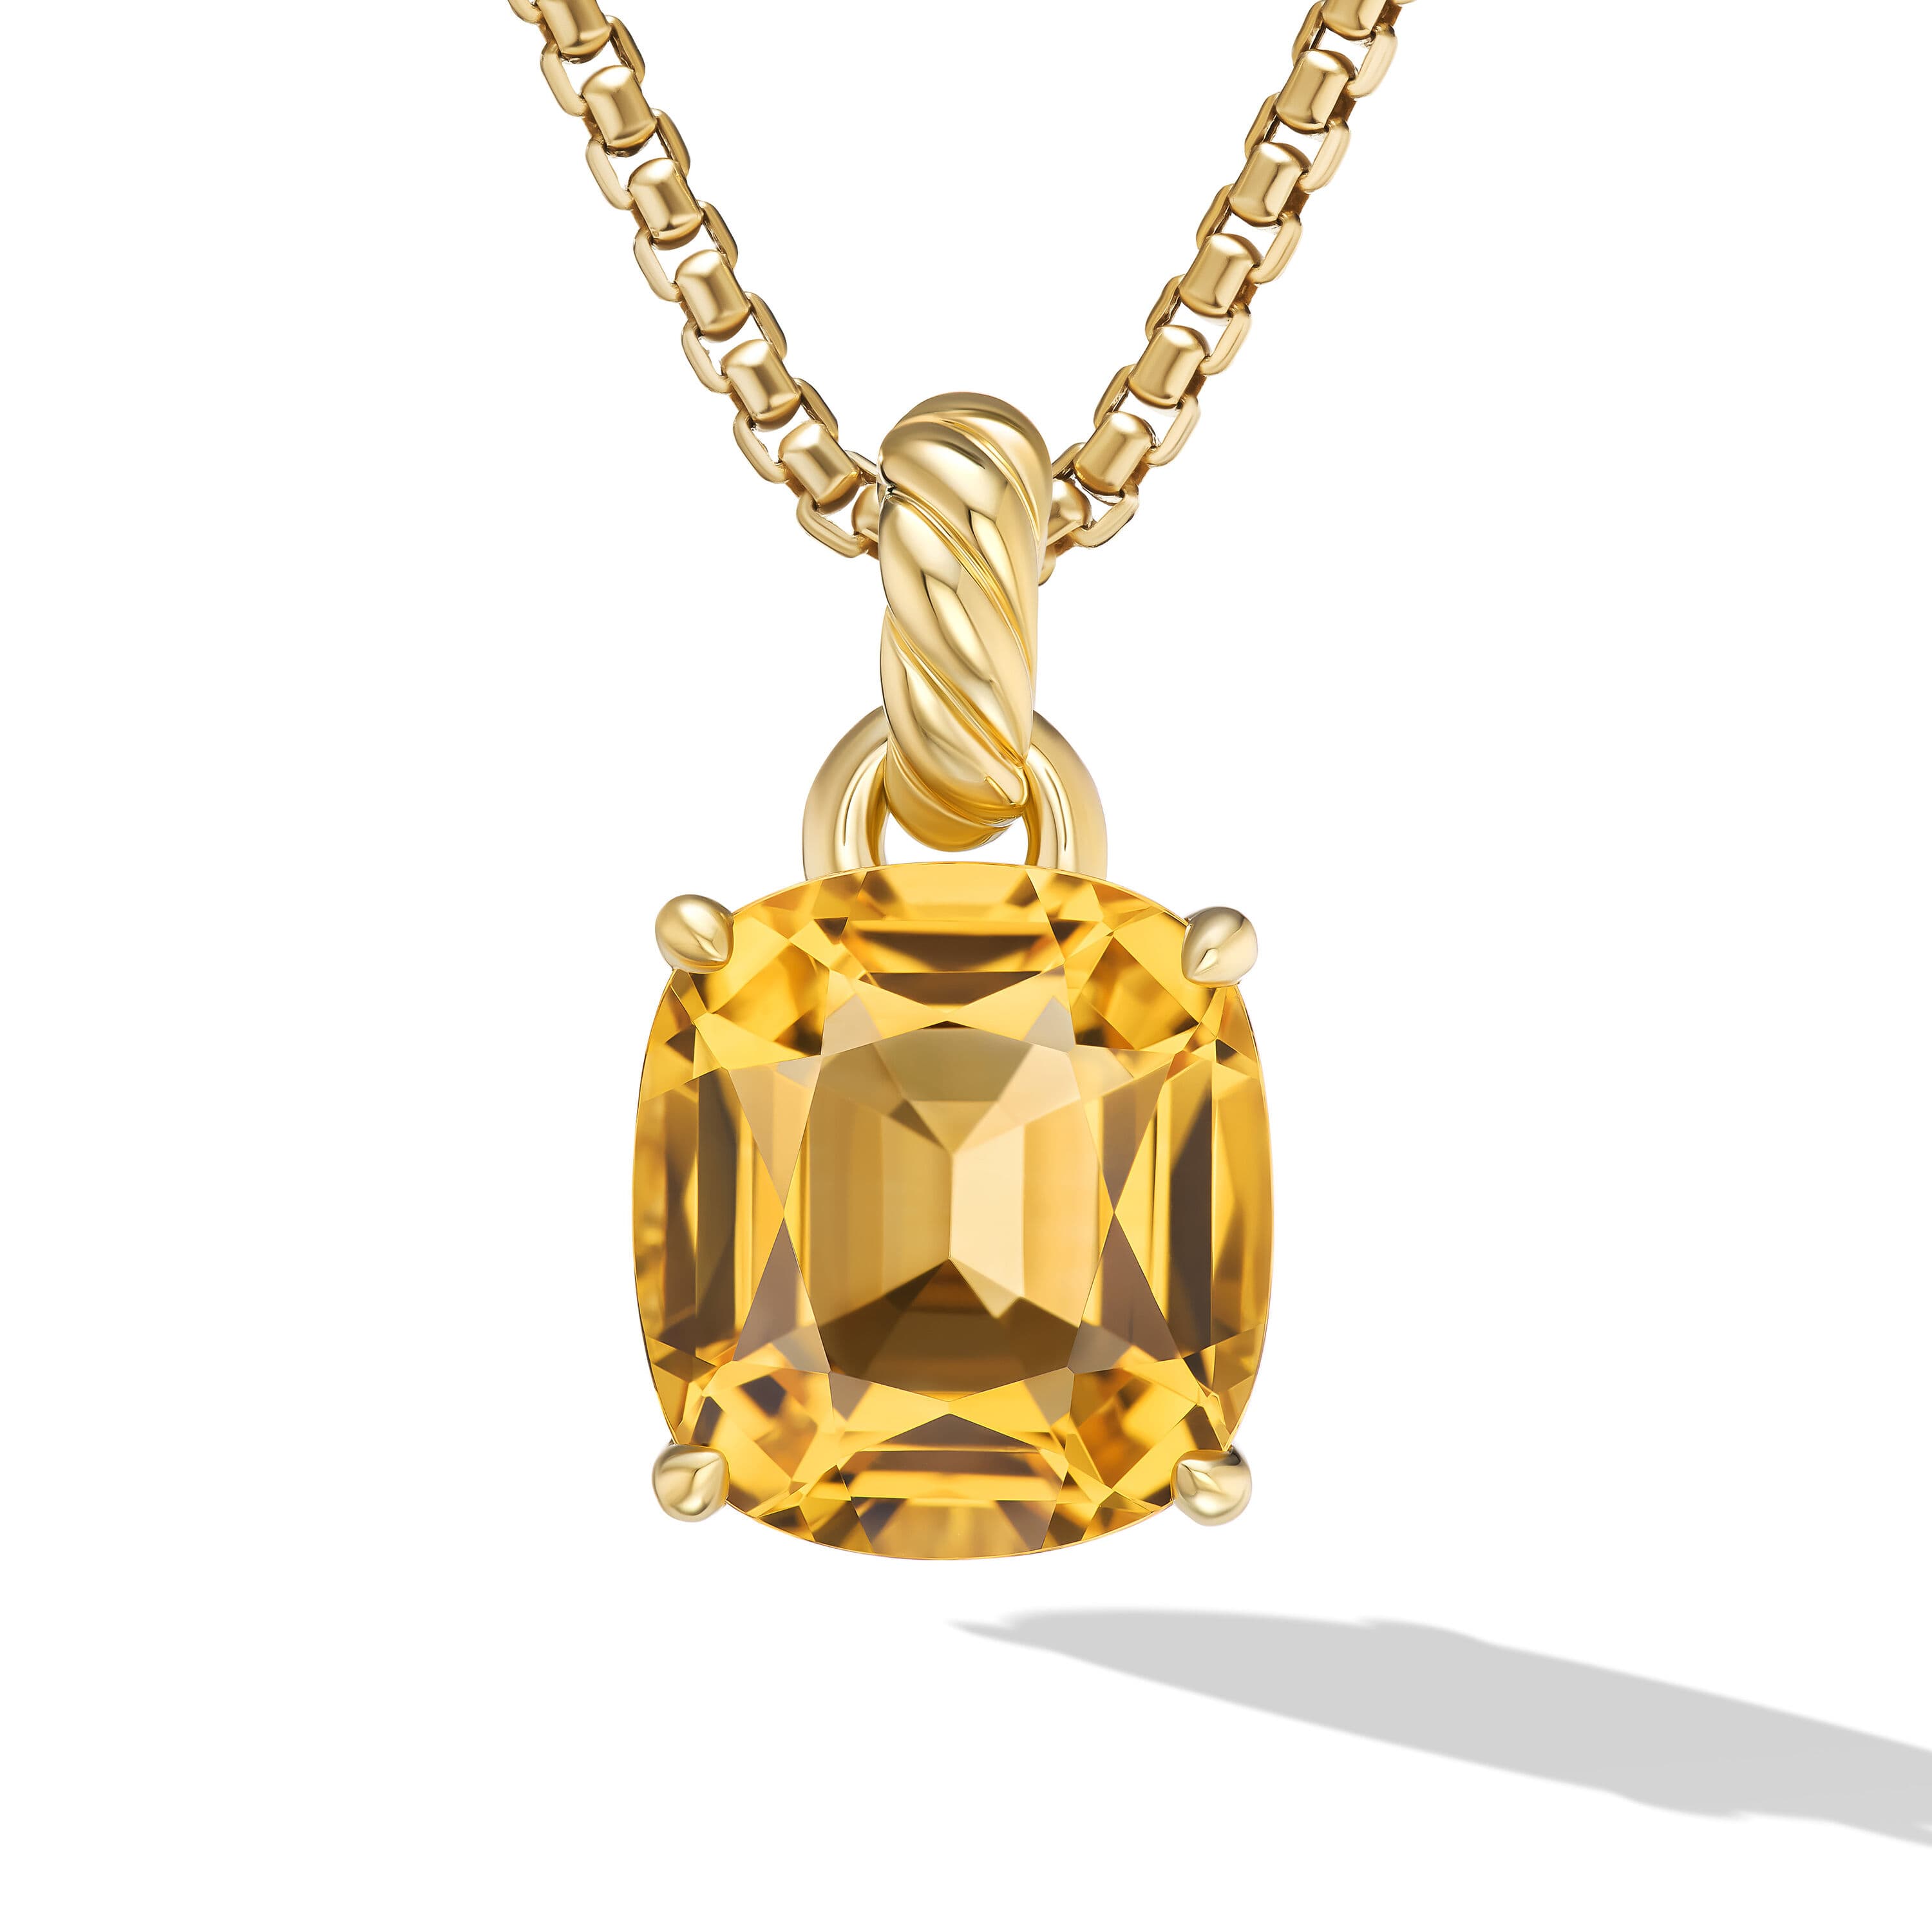 David Yurman Marbella Pendant in Gold with Citrine